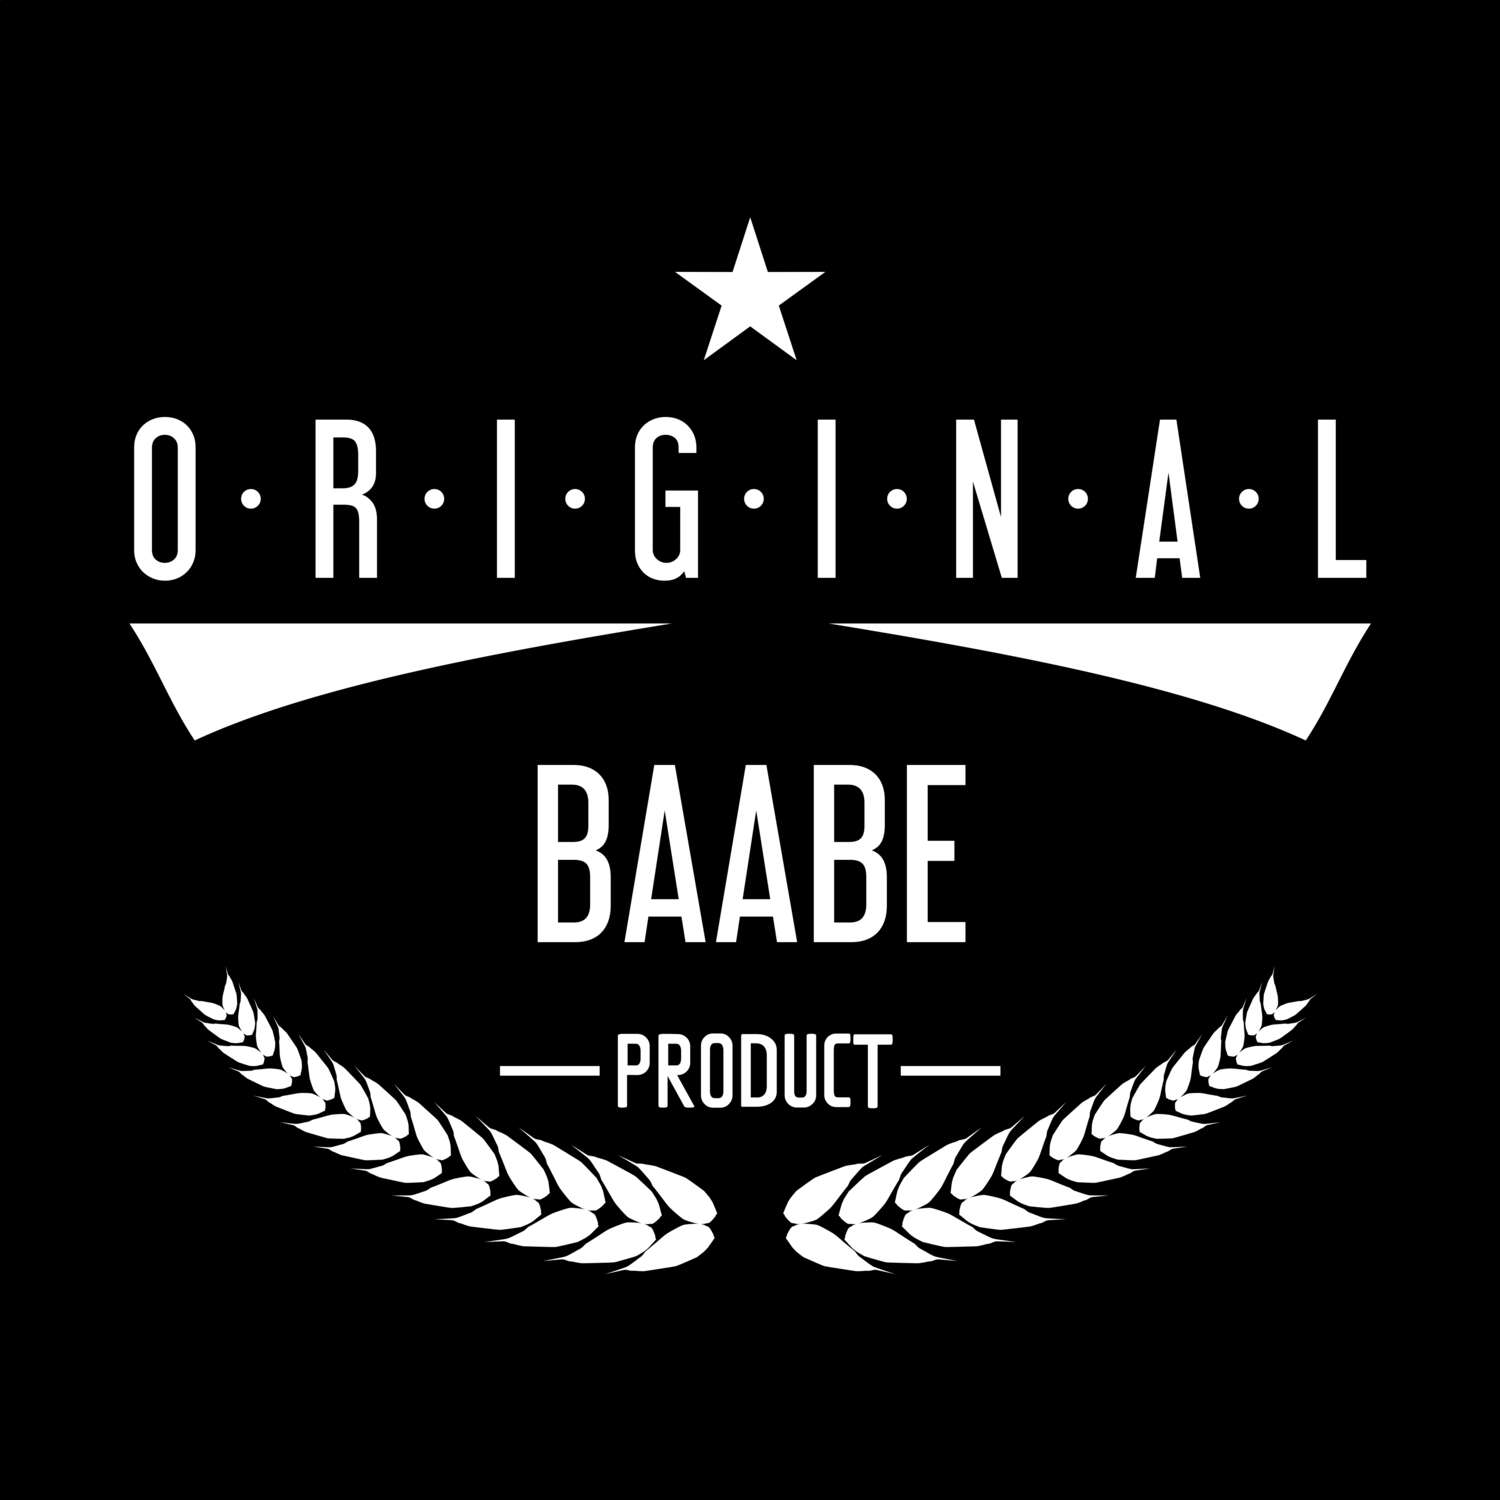 Baabe T-Shirt »Original Product«